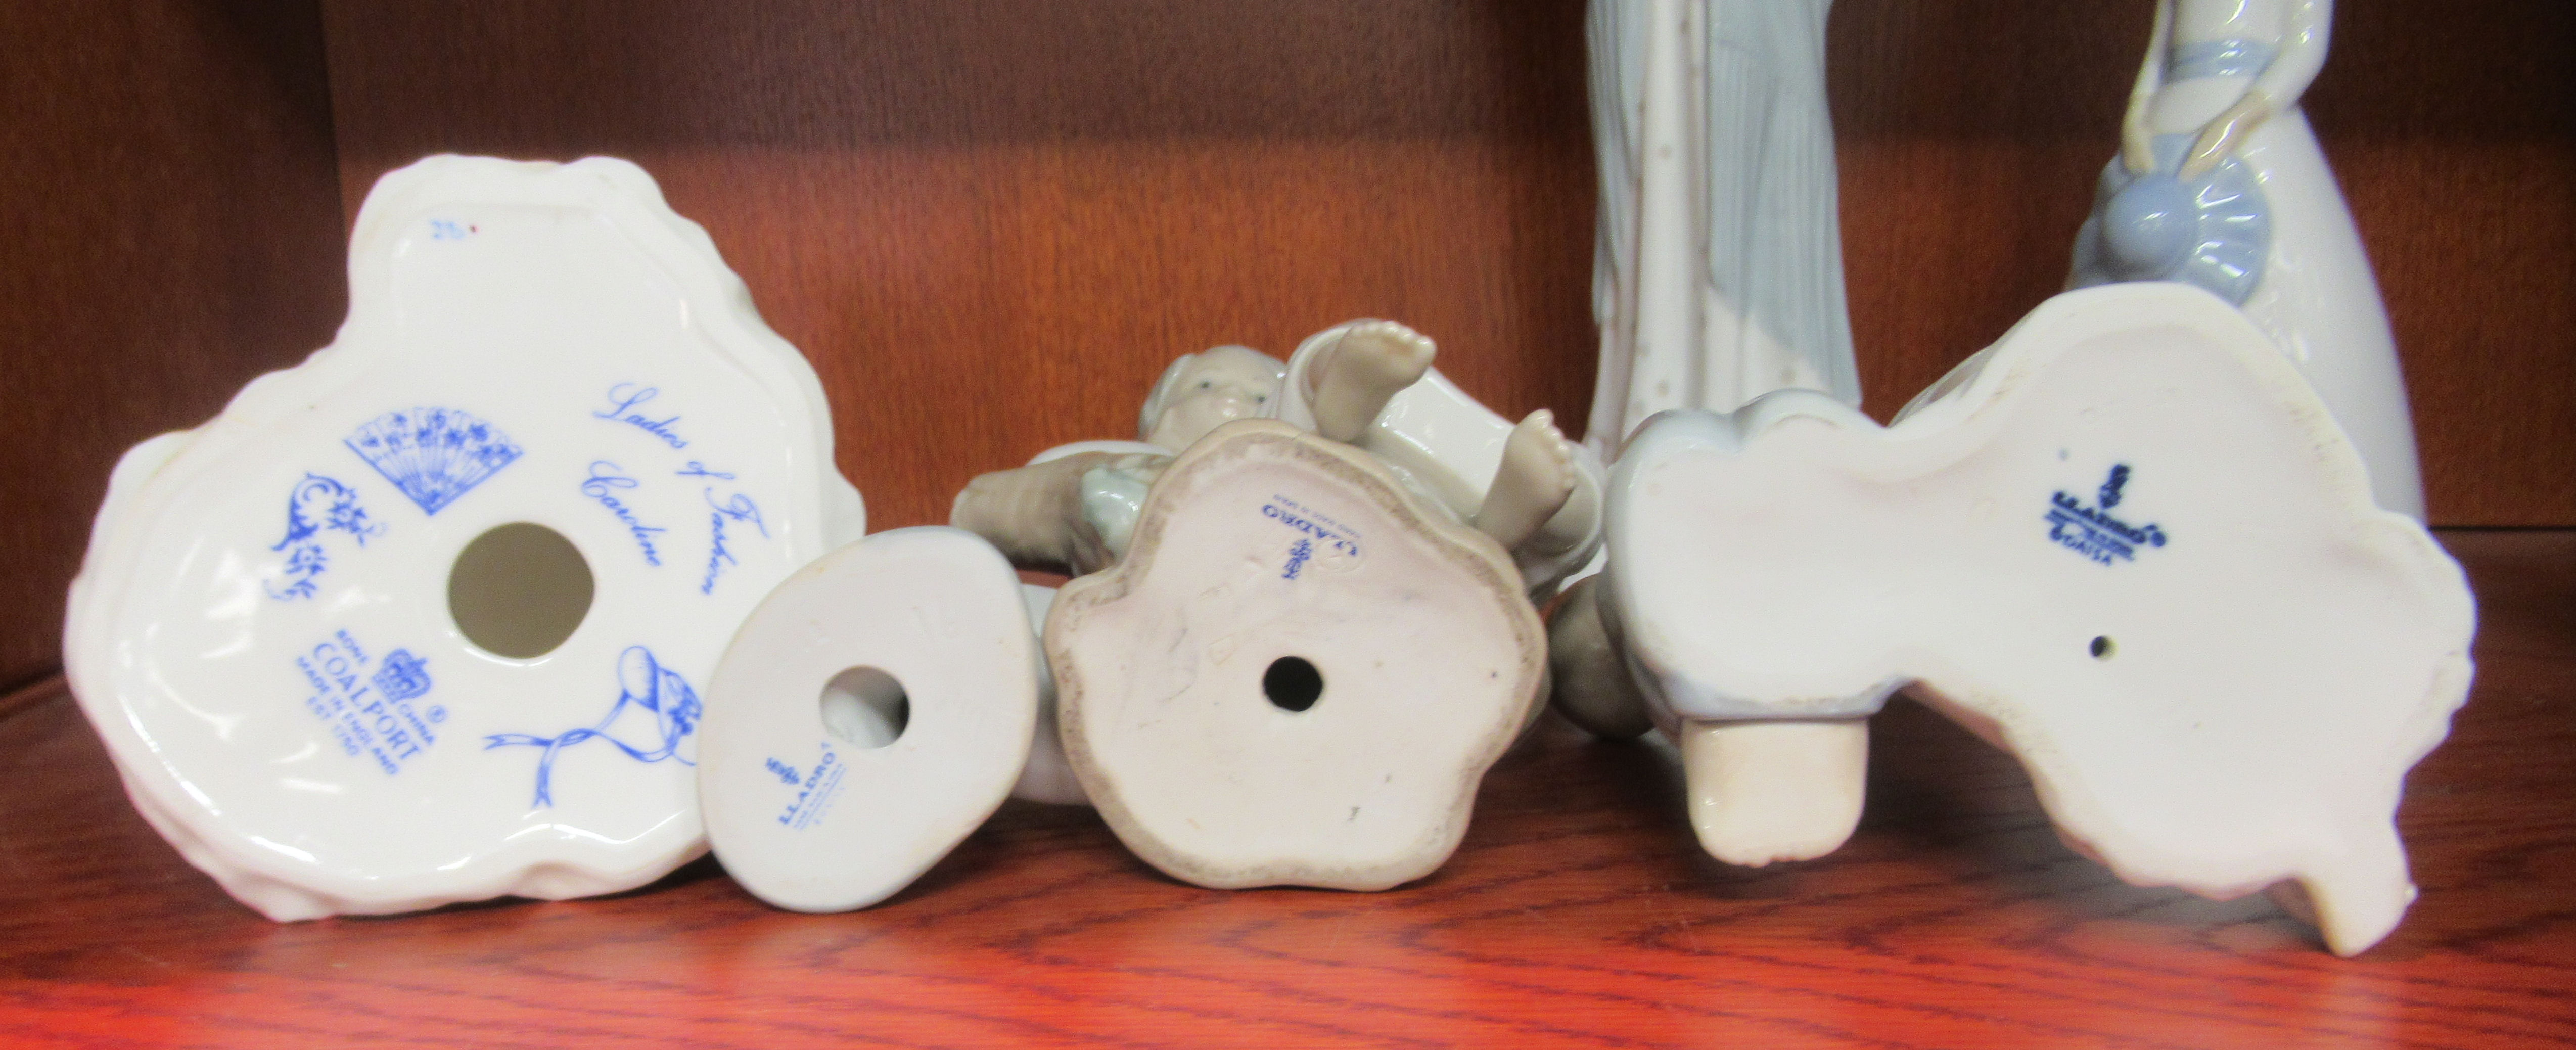 Decorative ceramics: to include Lladro porcelain model animals  largest 4.5"h - Image 9 of 12